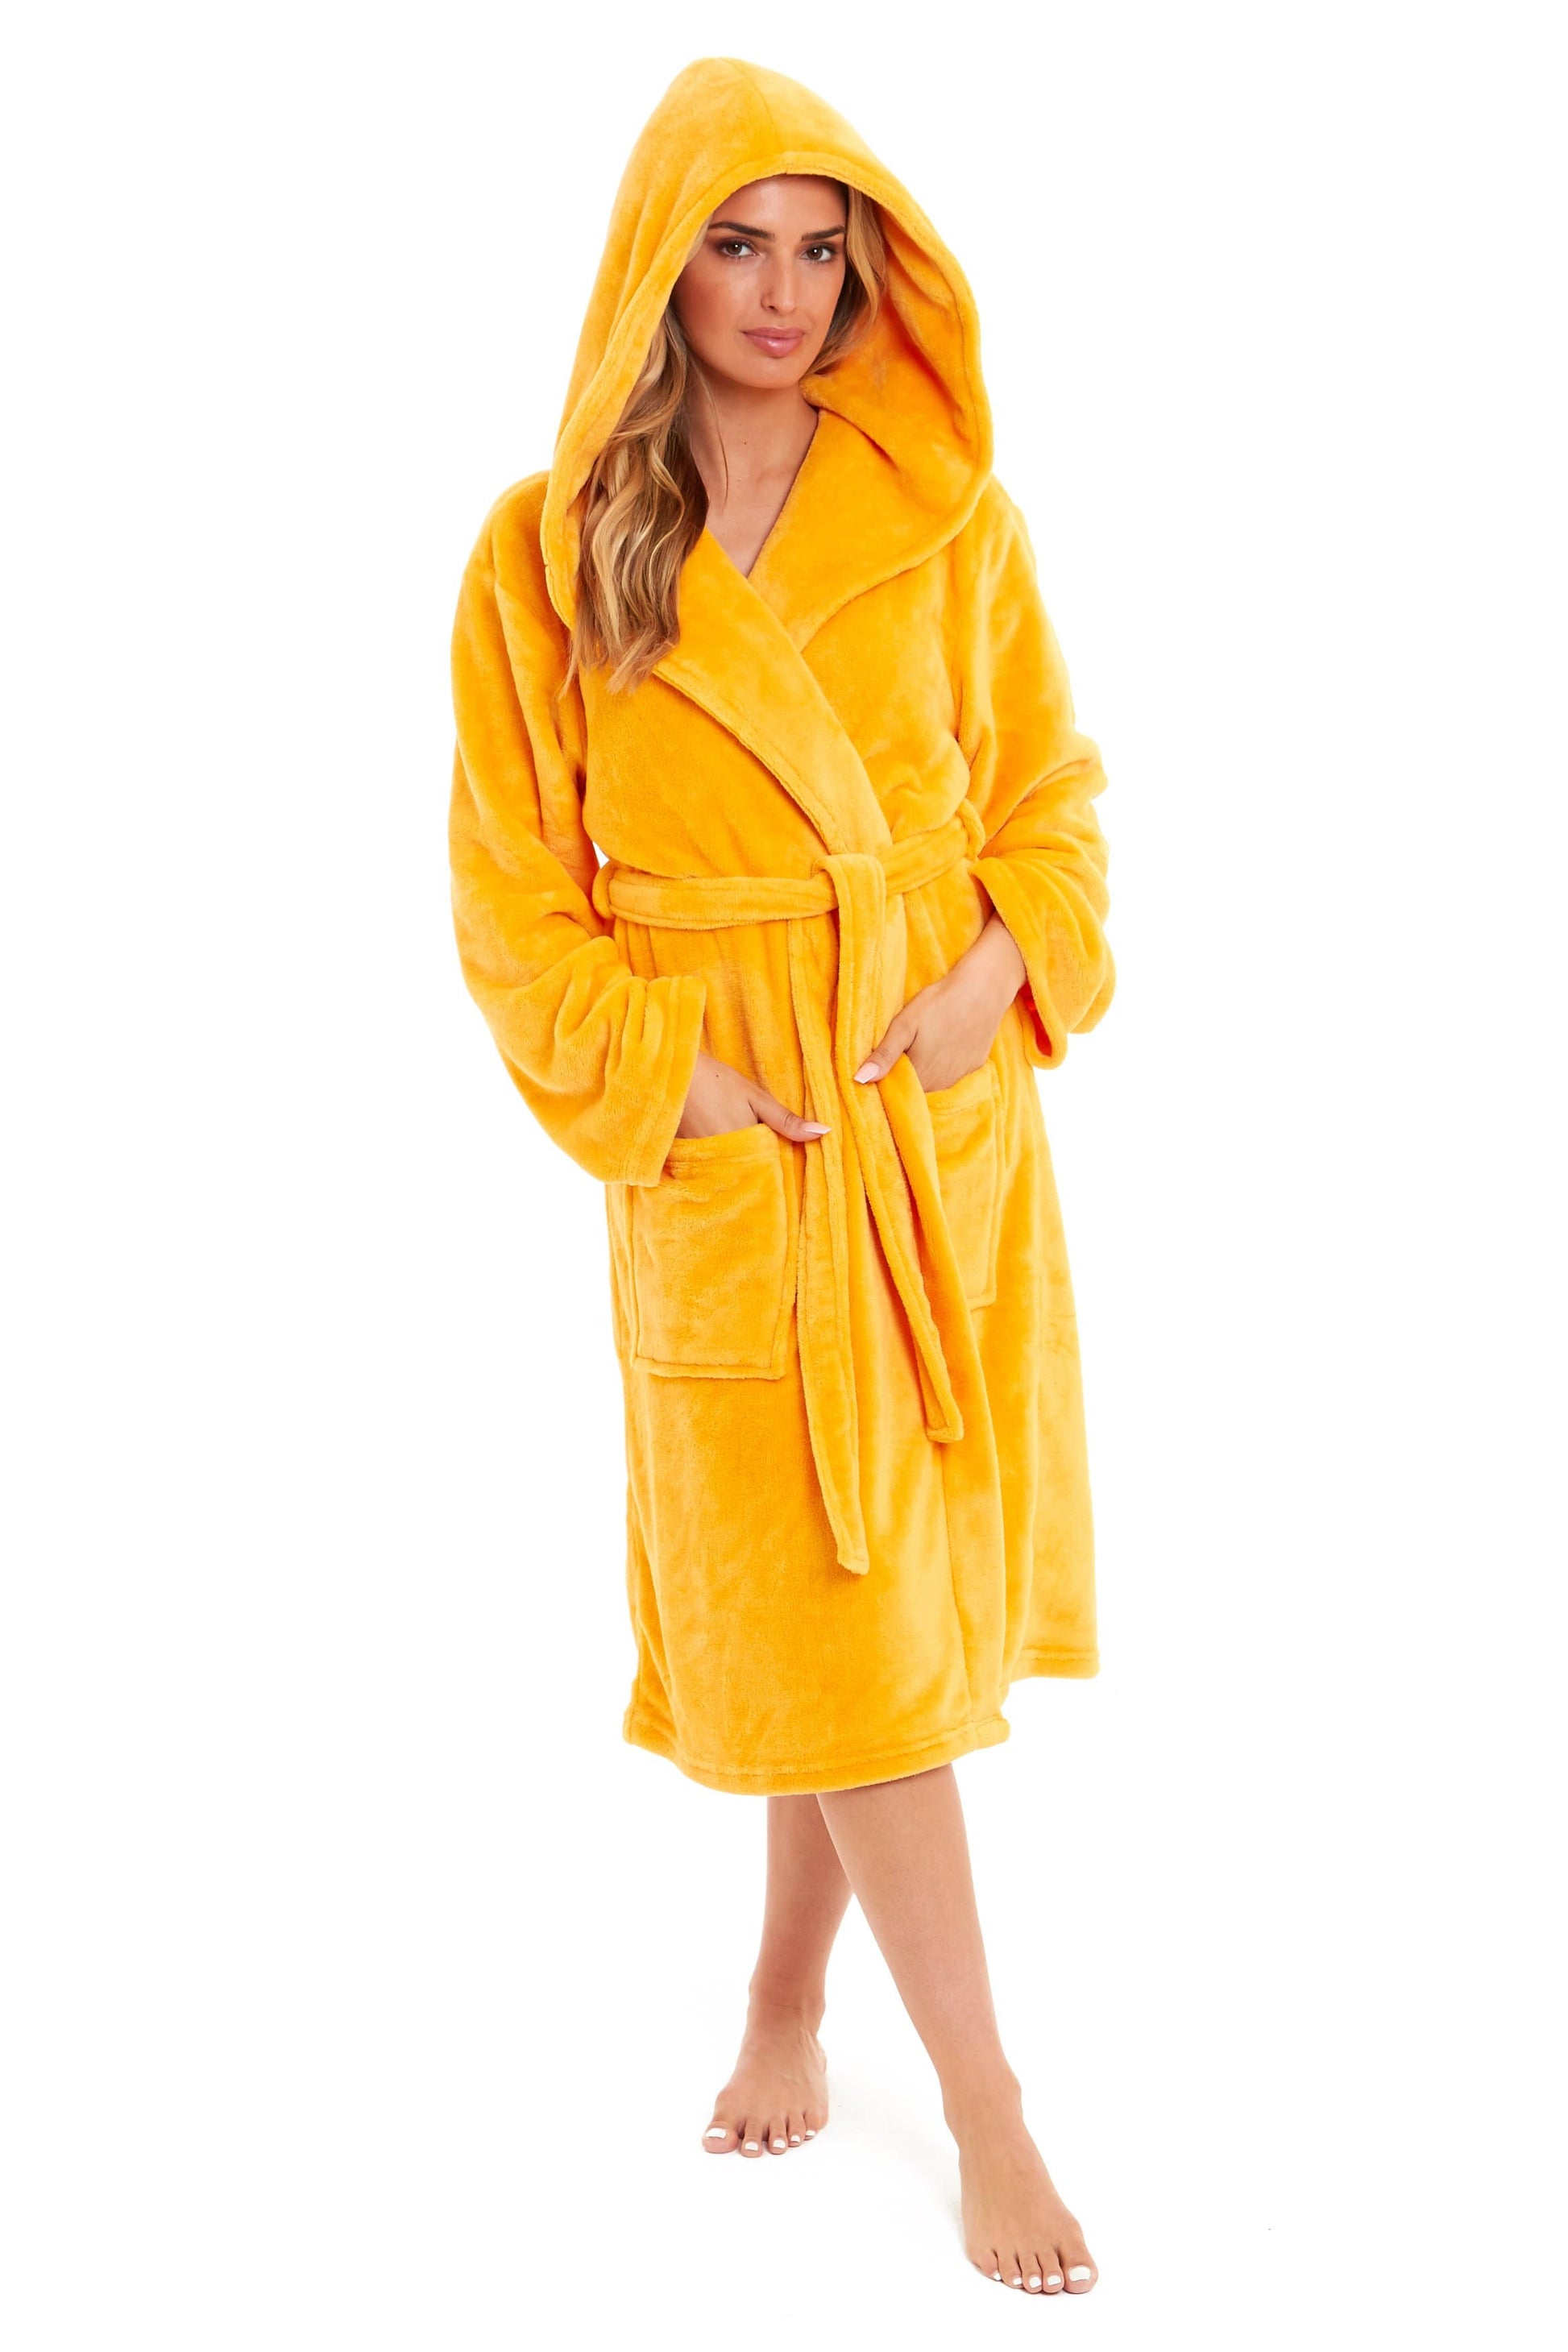 Super Soft Plush Fleece Hooded Dressing Gown SMALL | UK 8-10 / MUSTARD Daisy Dreamer Dressing Gown